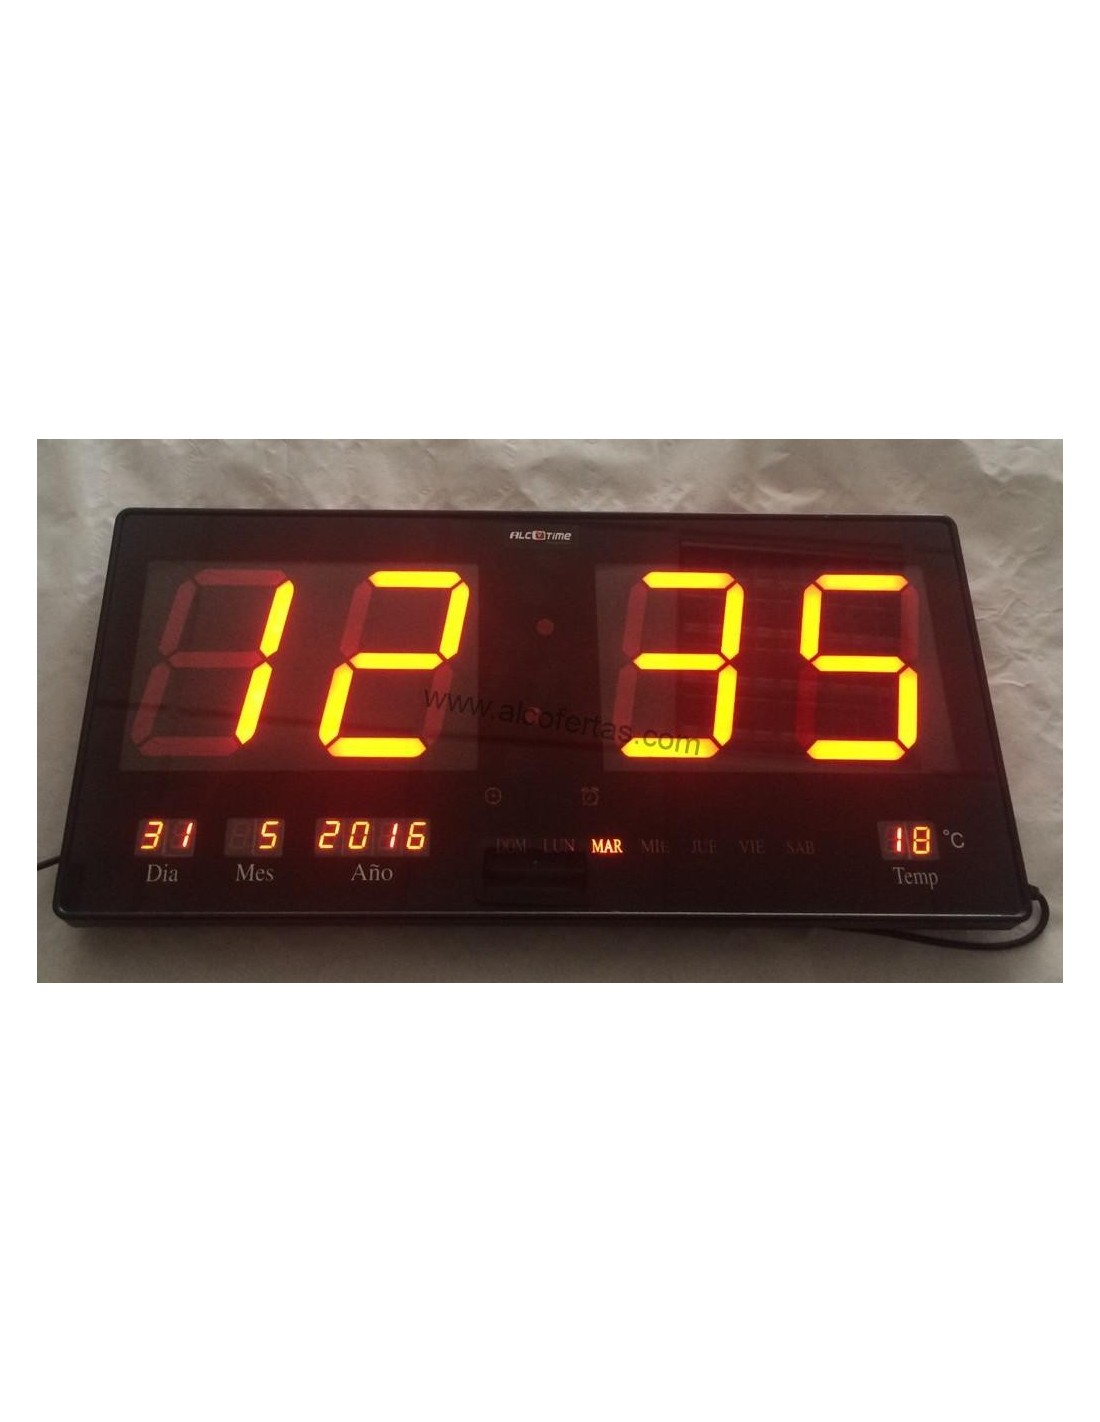 Representación exégesis Penélope Reloj pared digital con alarma, digito 10,5cm